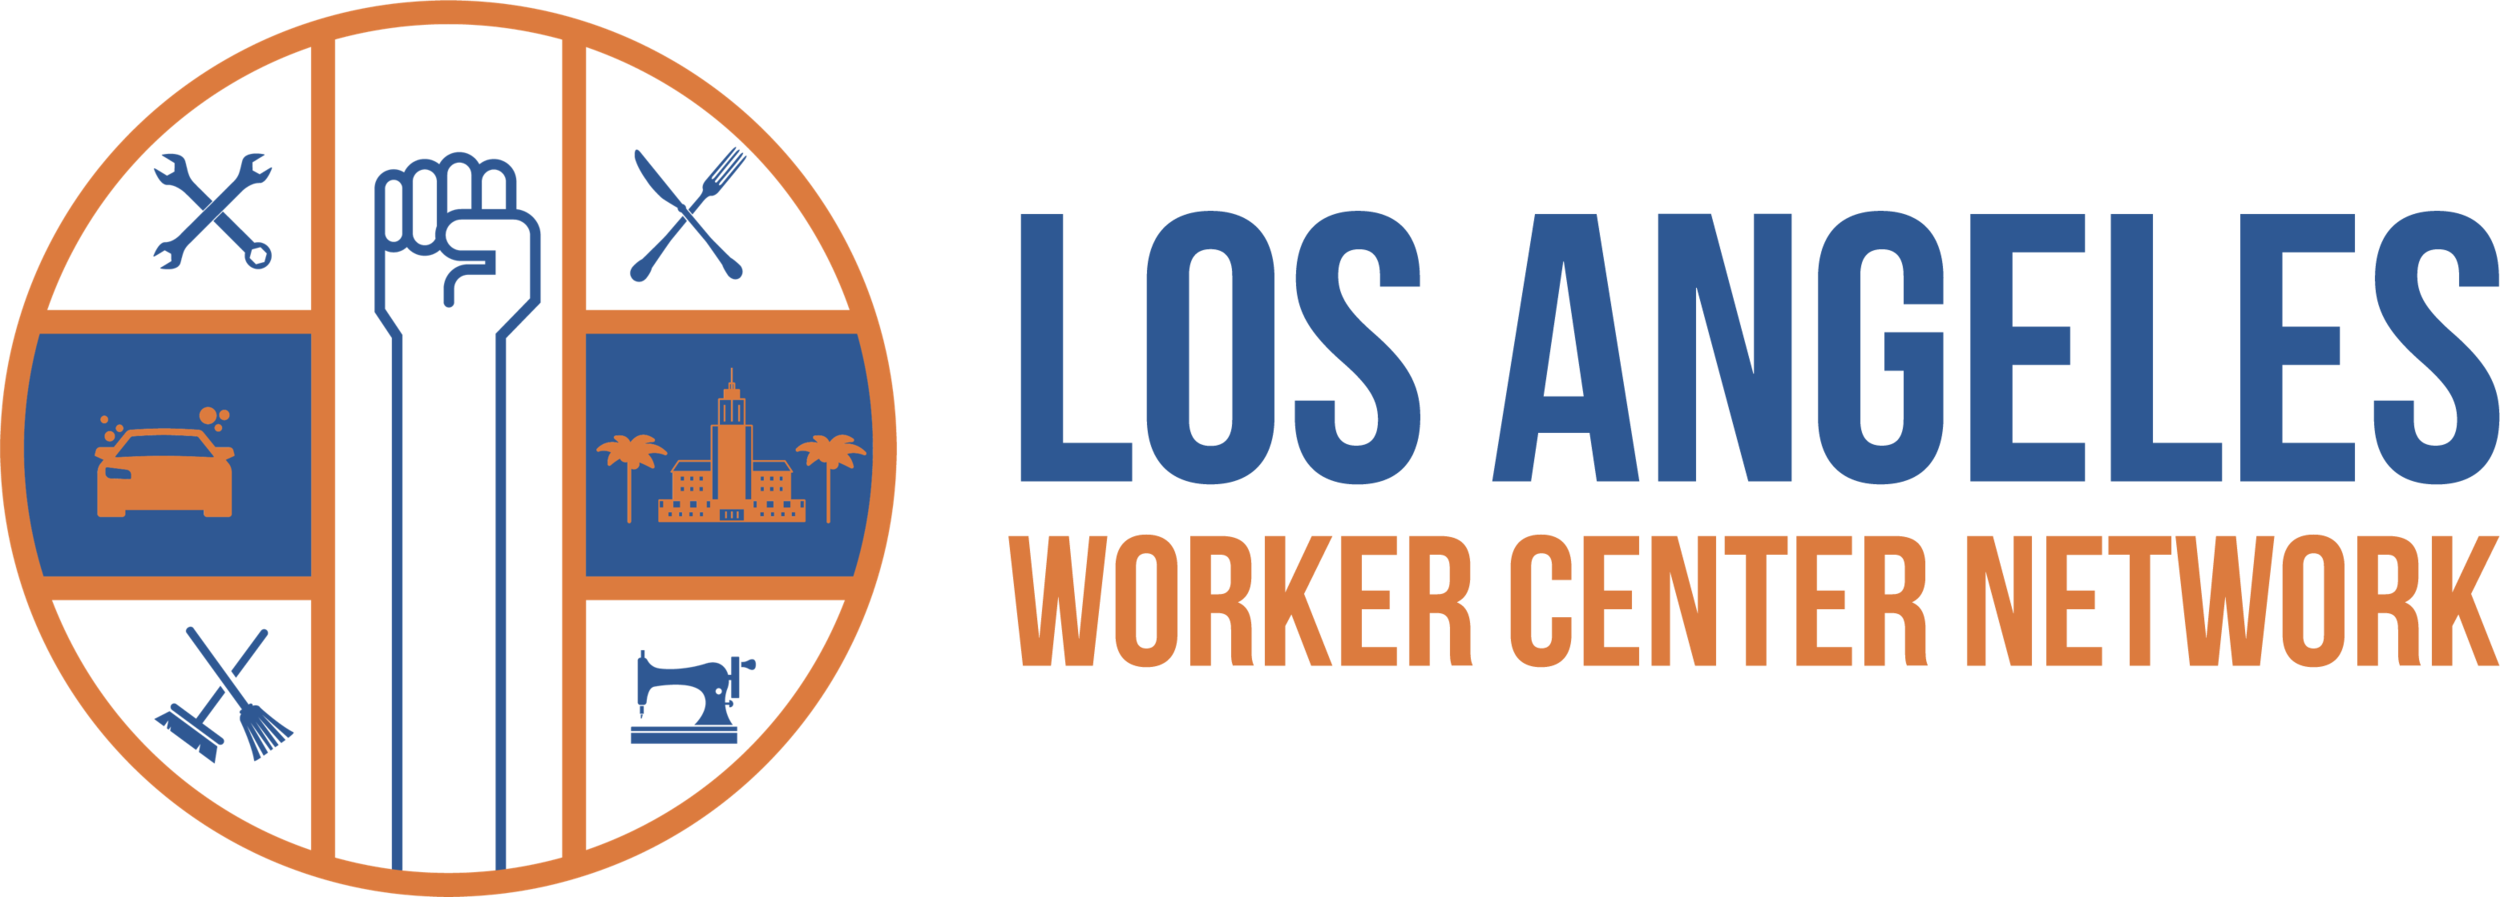 LA workers alliance logo.png